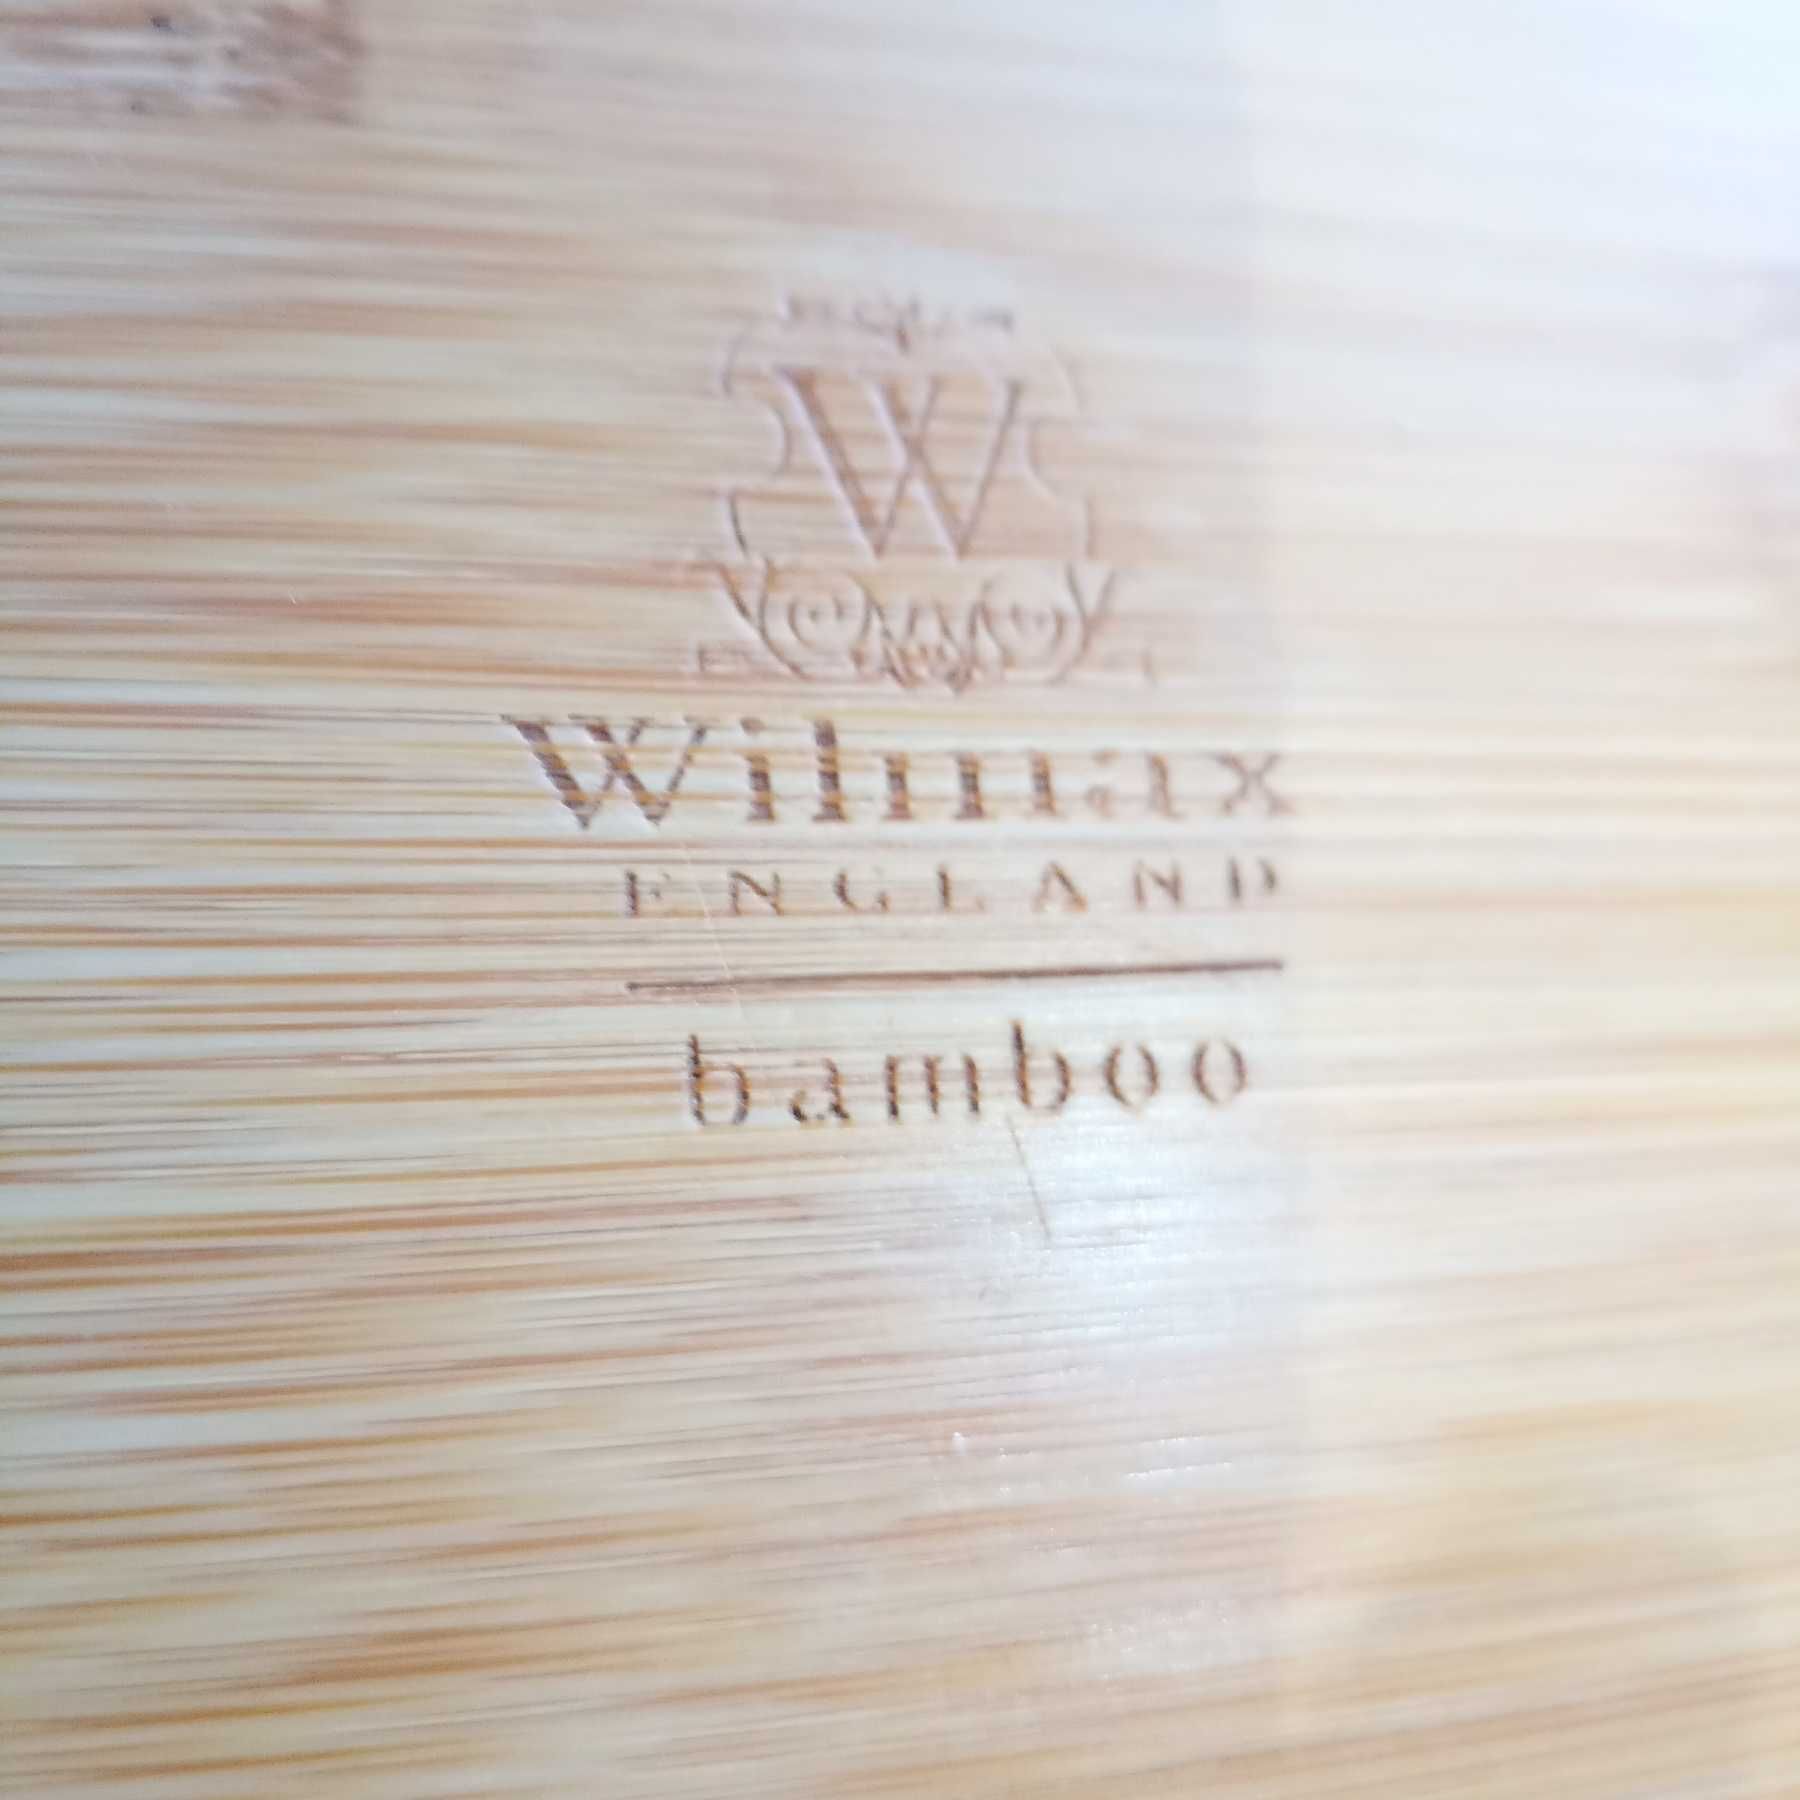 Доска сервировочная Wilmax Bamboo круглая 25.5 см  Англия